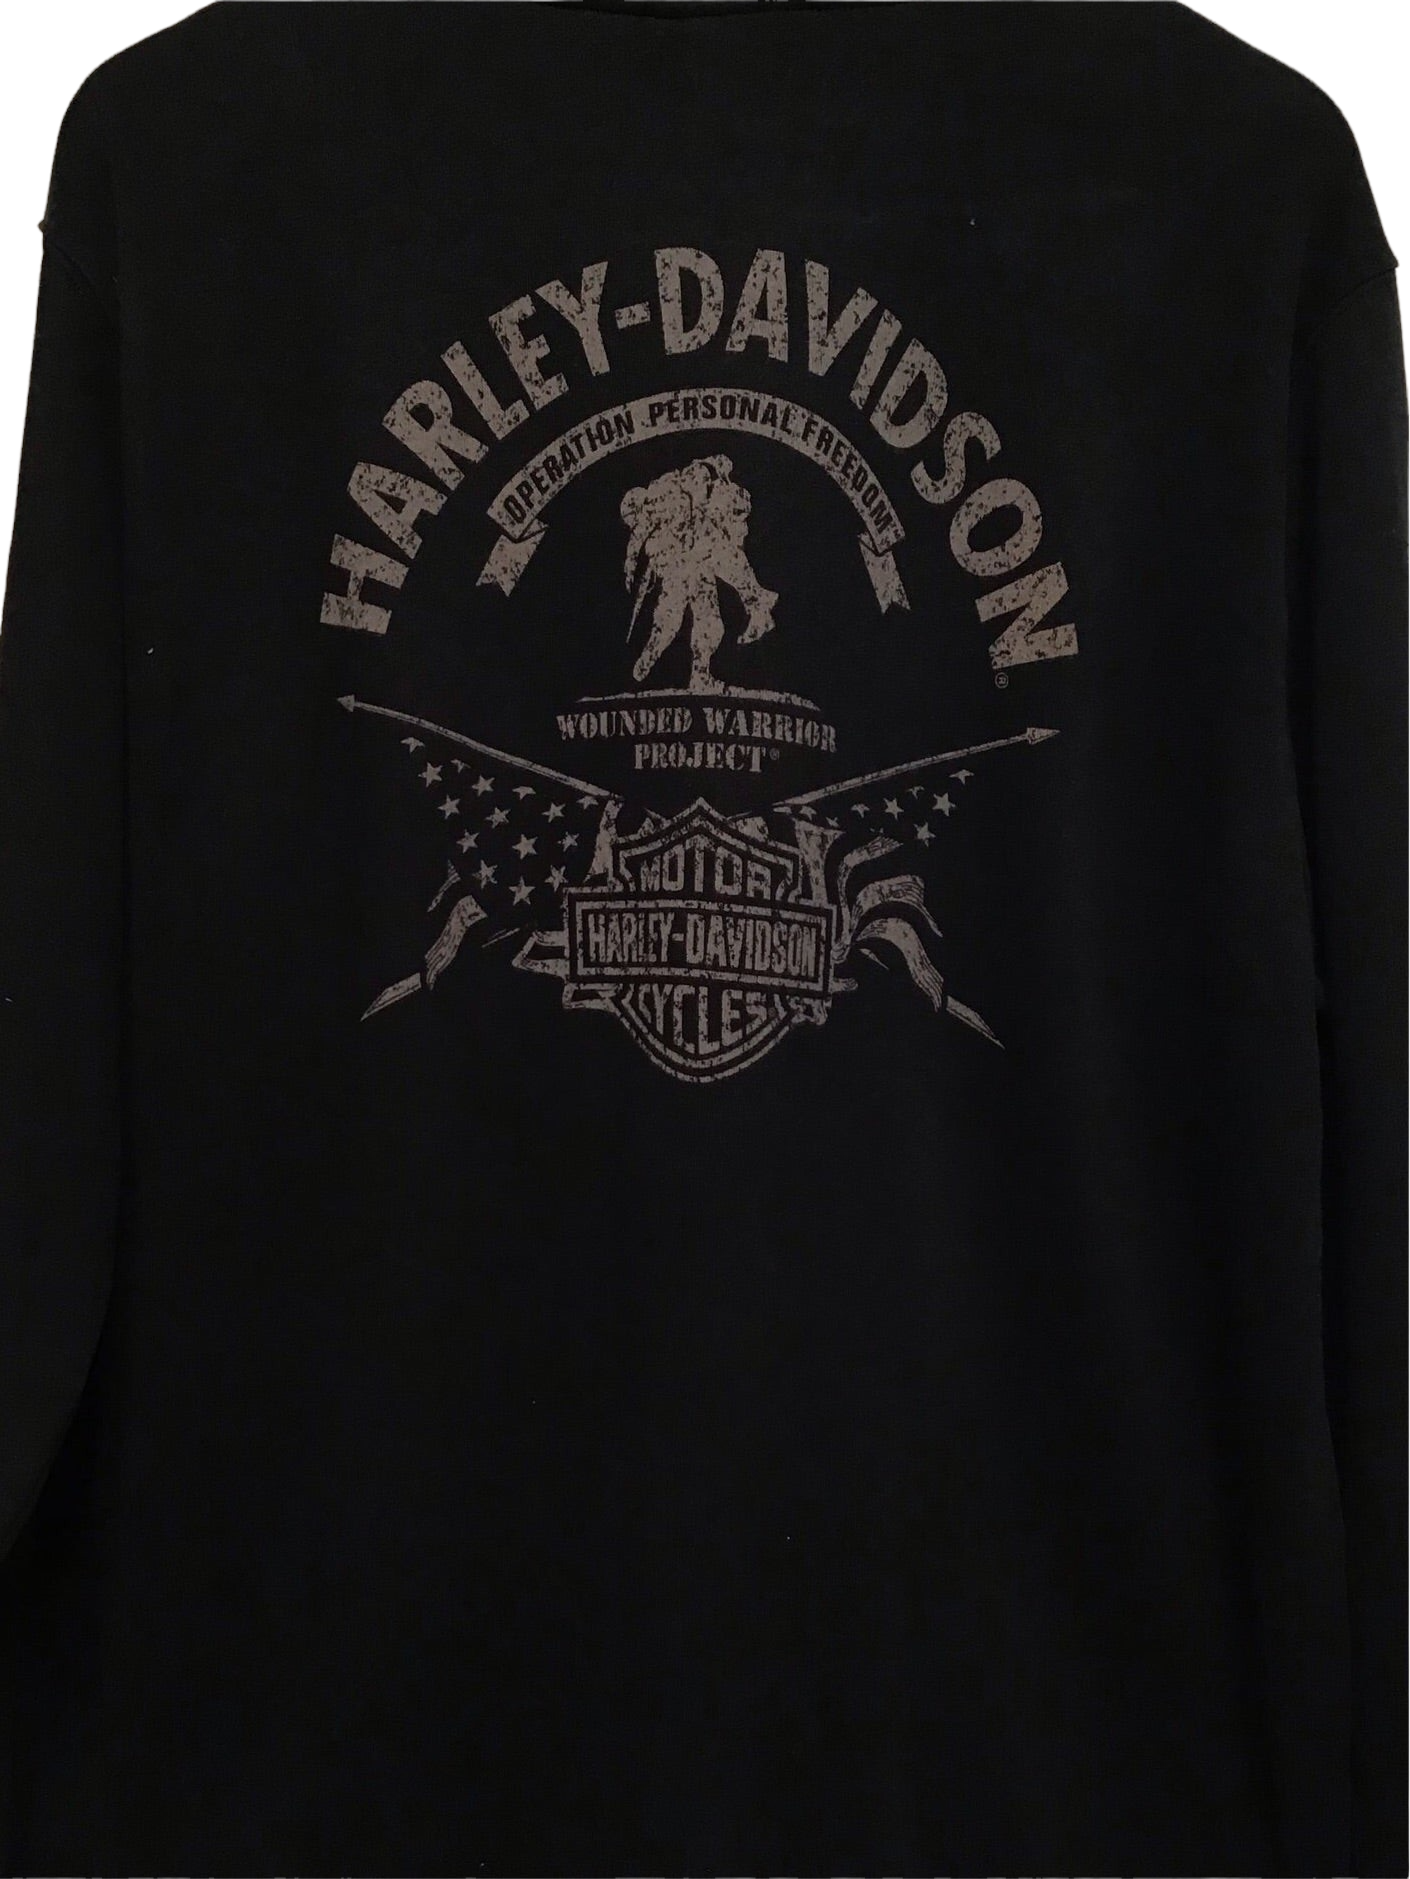 Harley Davidson Zip up Hoodie (Size XL)